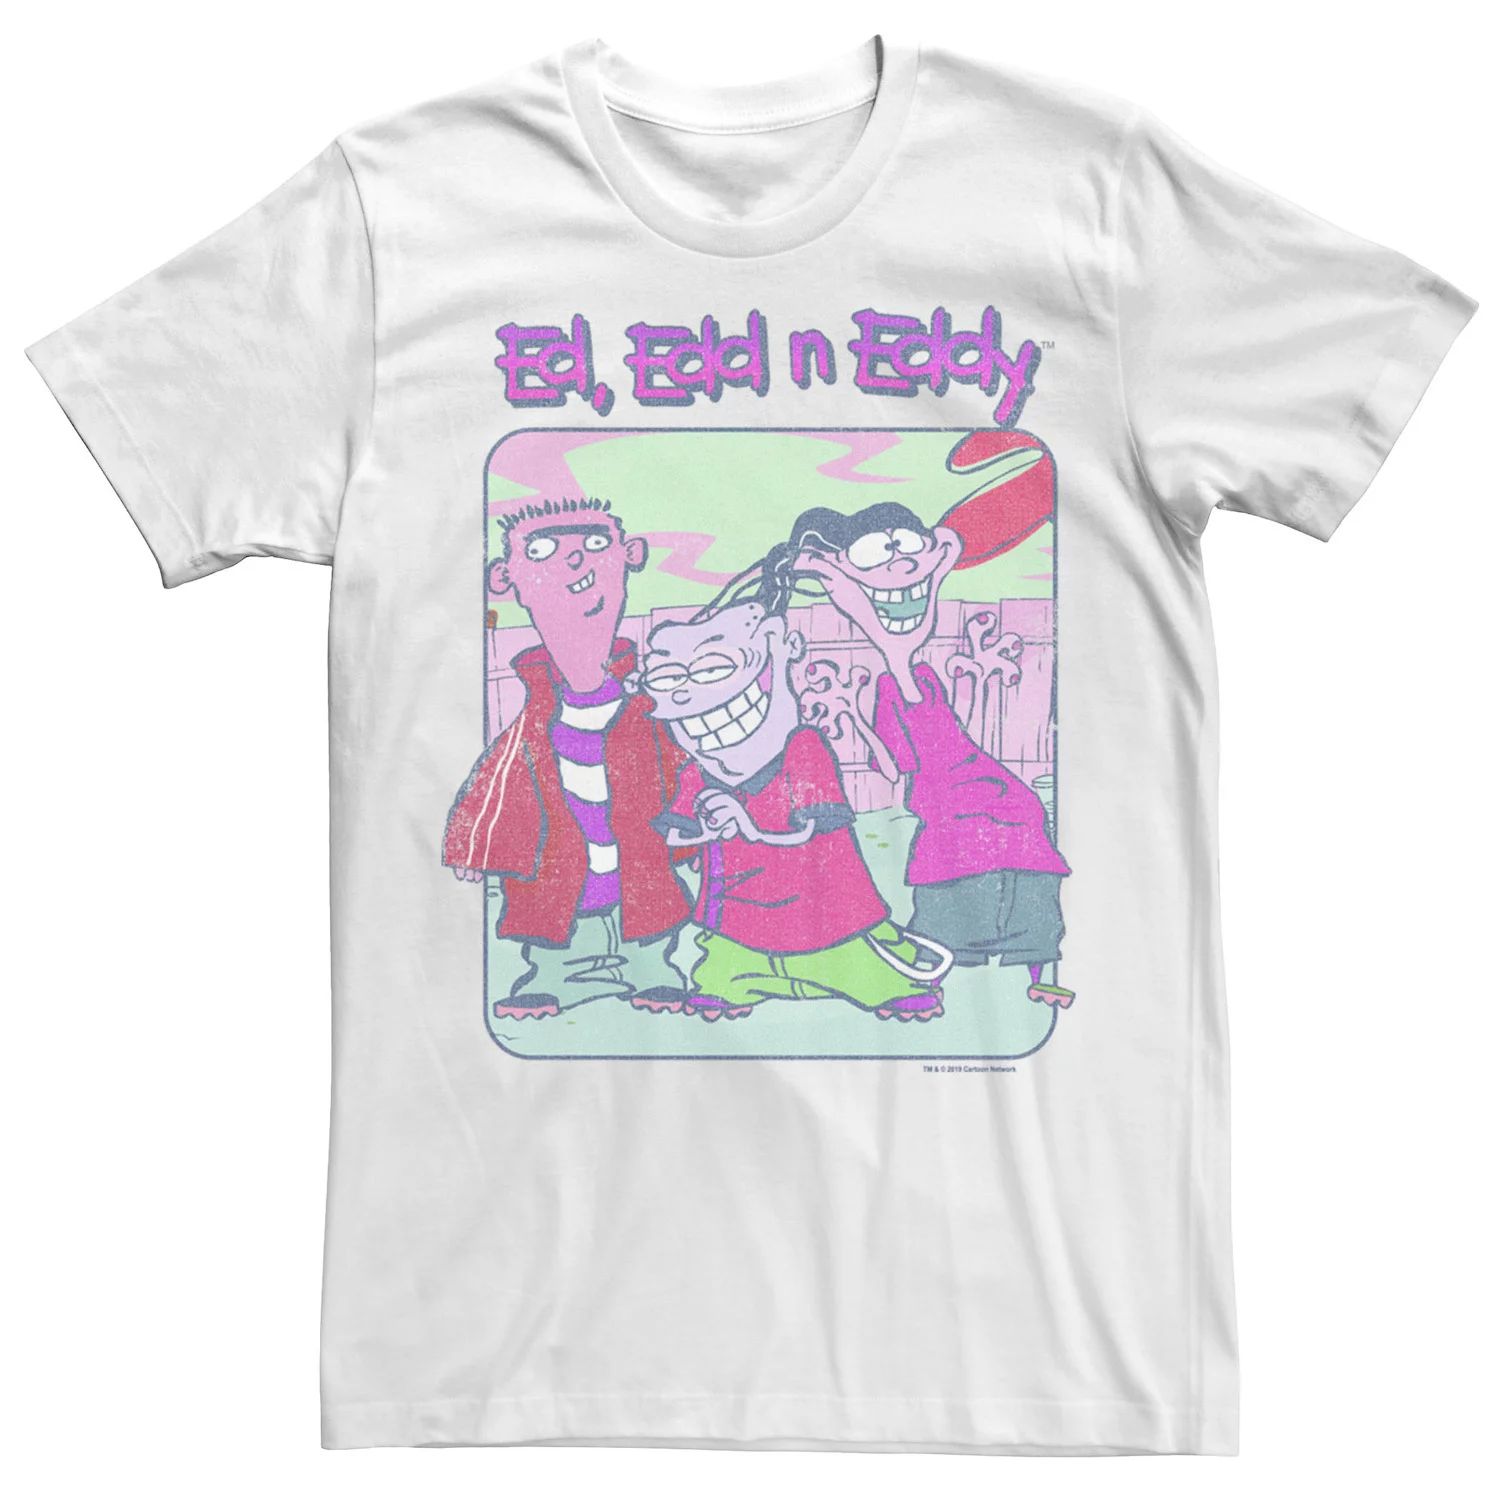 Мужская футболка с потертым плакатом Ed, Edd & Eddy Licensed Character цена и фото